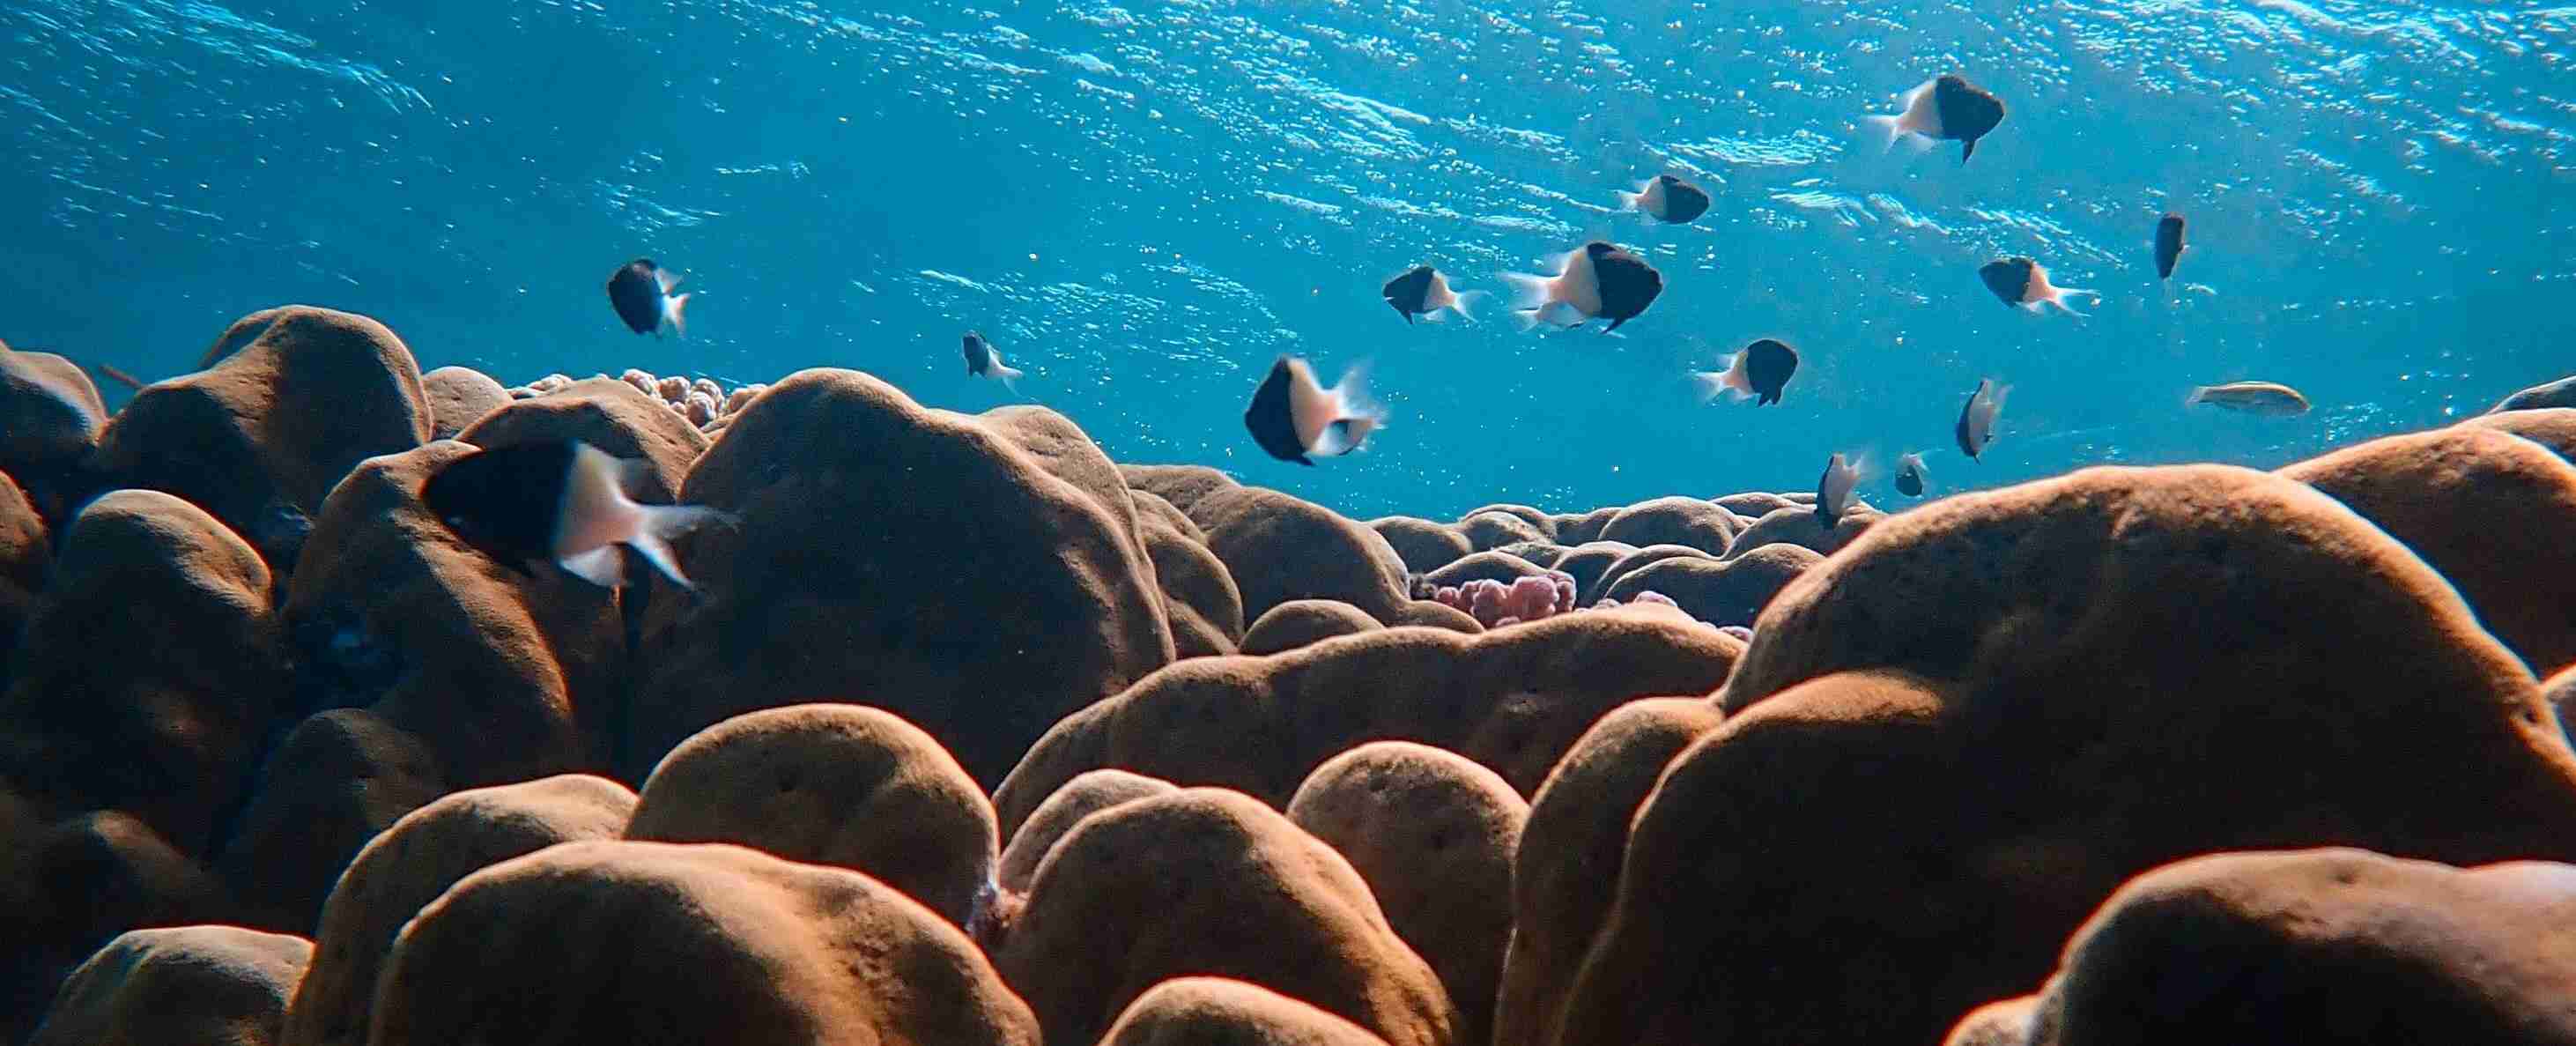 School of fish swimming among large brown rocks on the ocean floor.